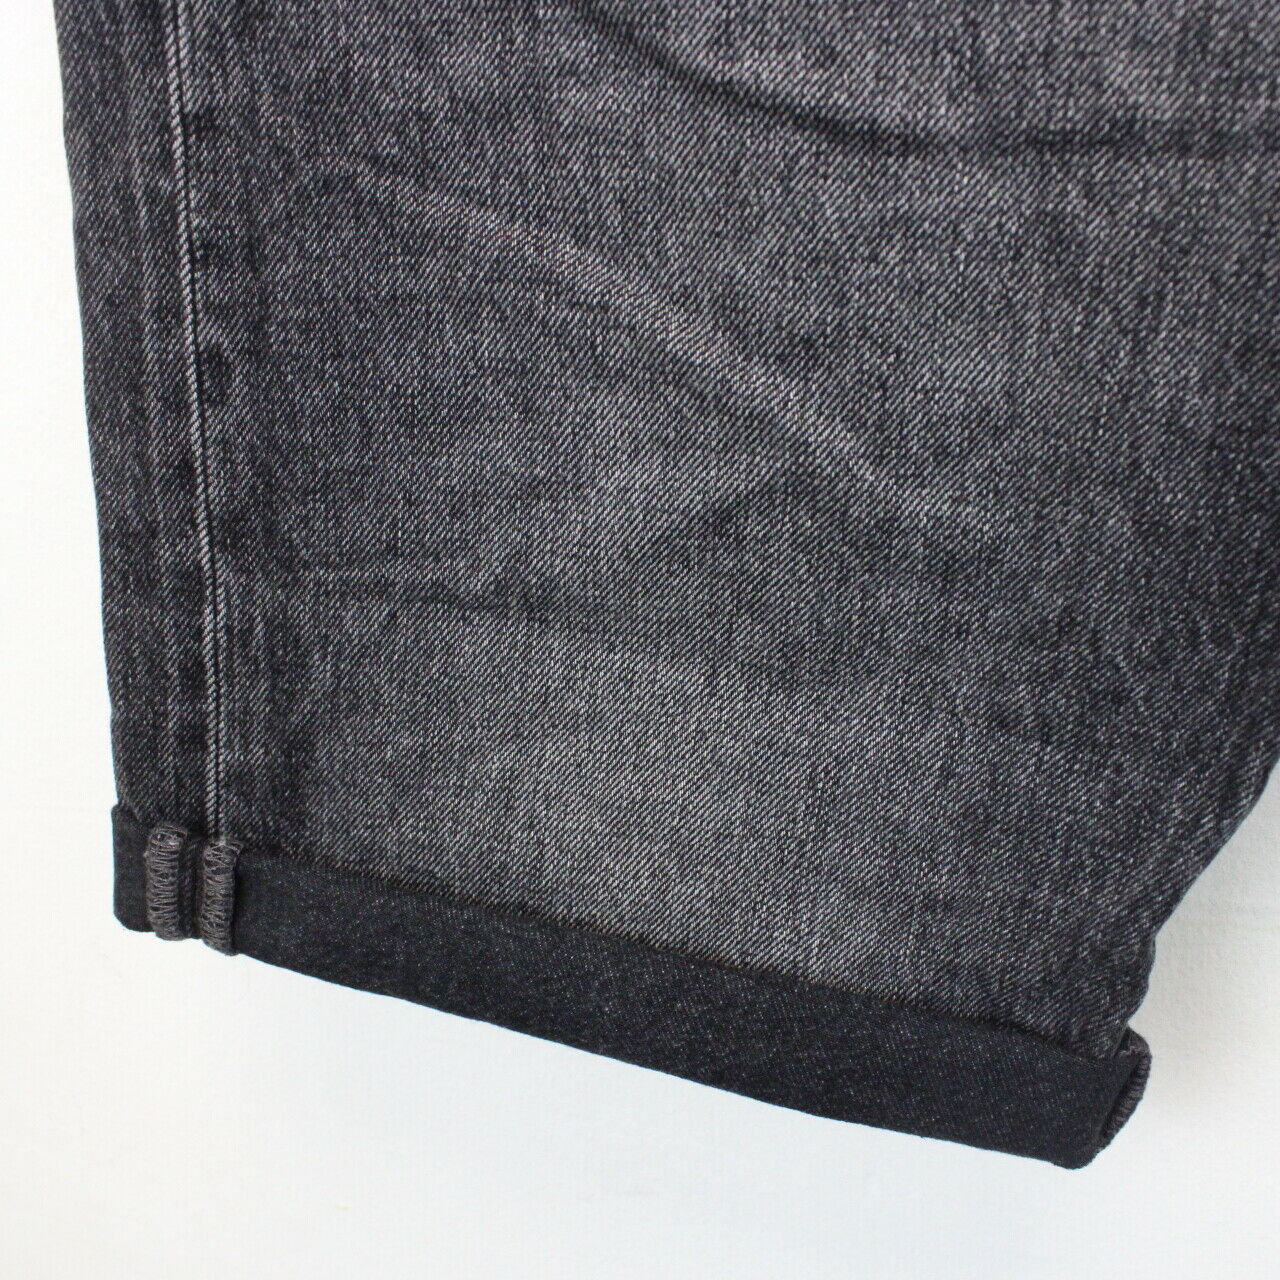 LEVIS 501 Shorts Black Charcoal | W36